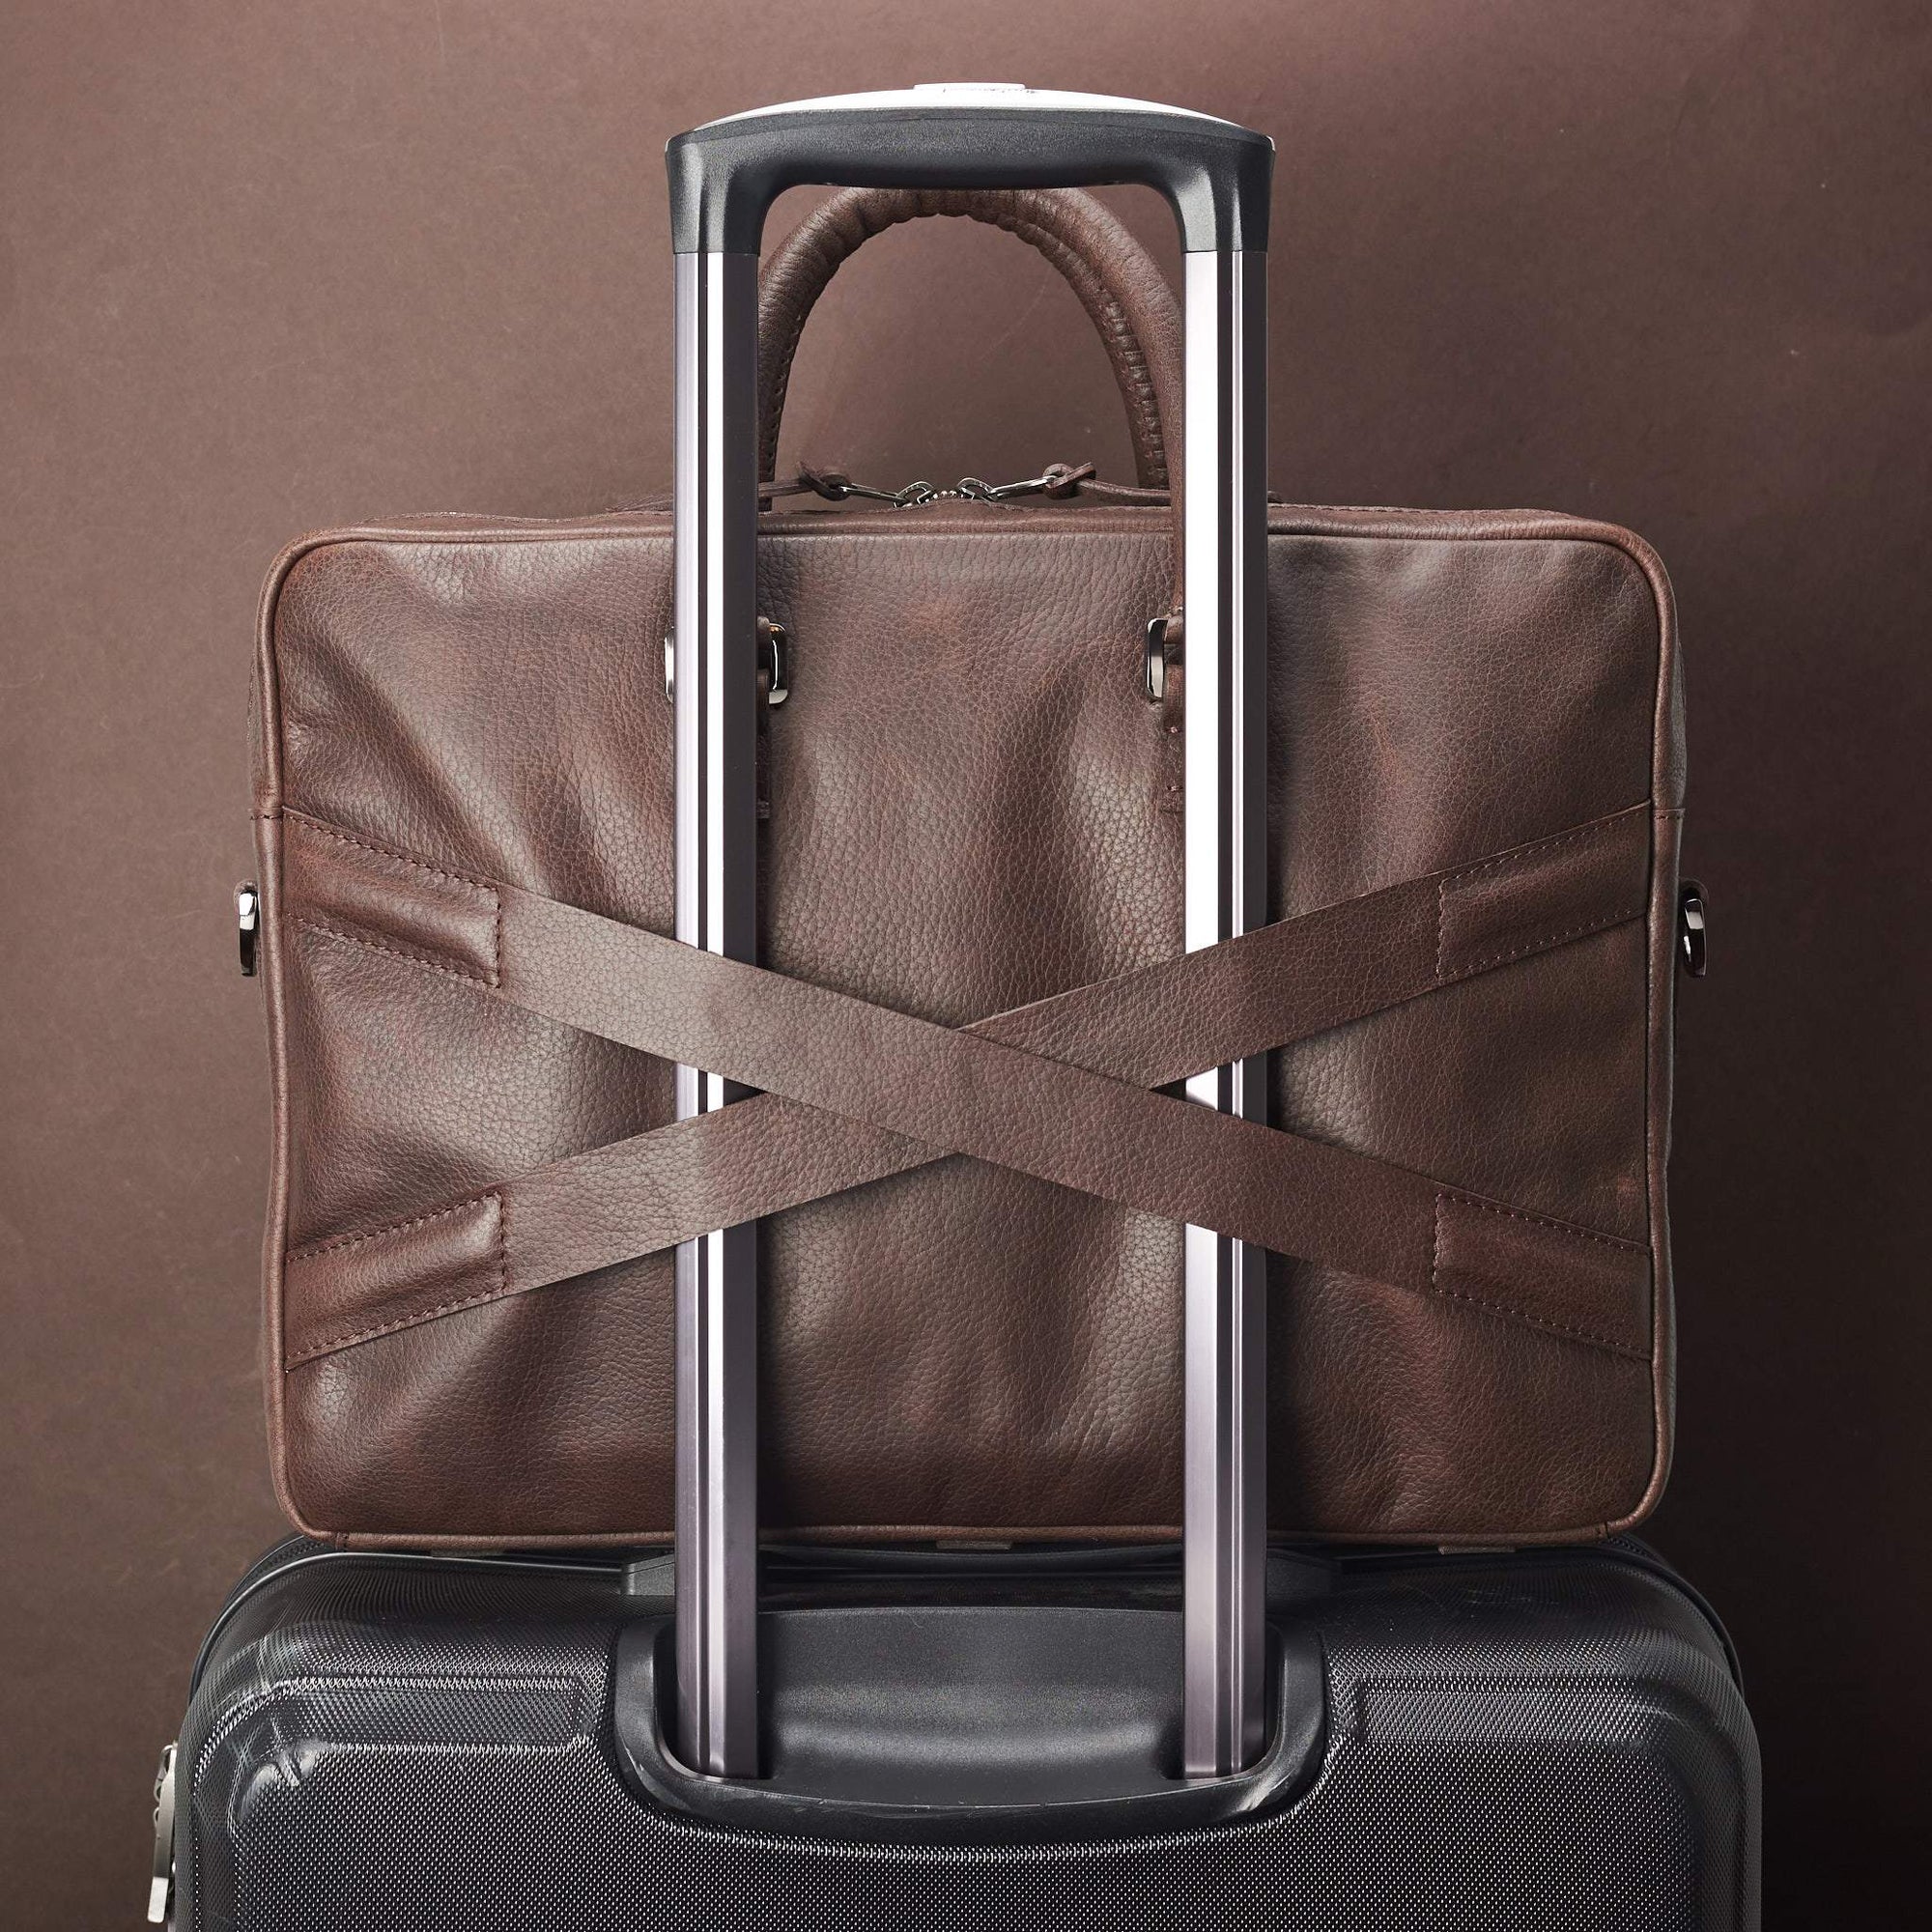 Luggage strap in x shape for messenger bag. Dark Brown leather briefcase laptop bag for men. Gazeli laptop briefcase by Capra Leather.